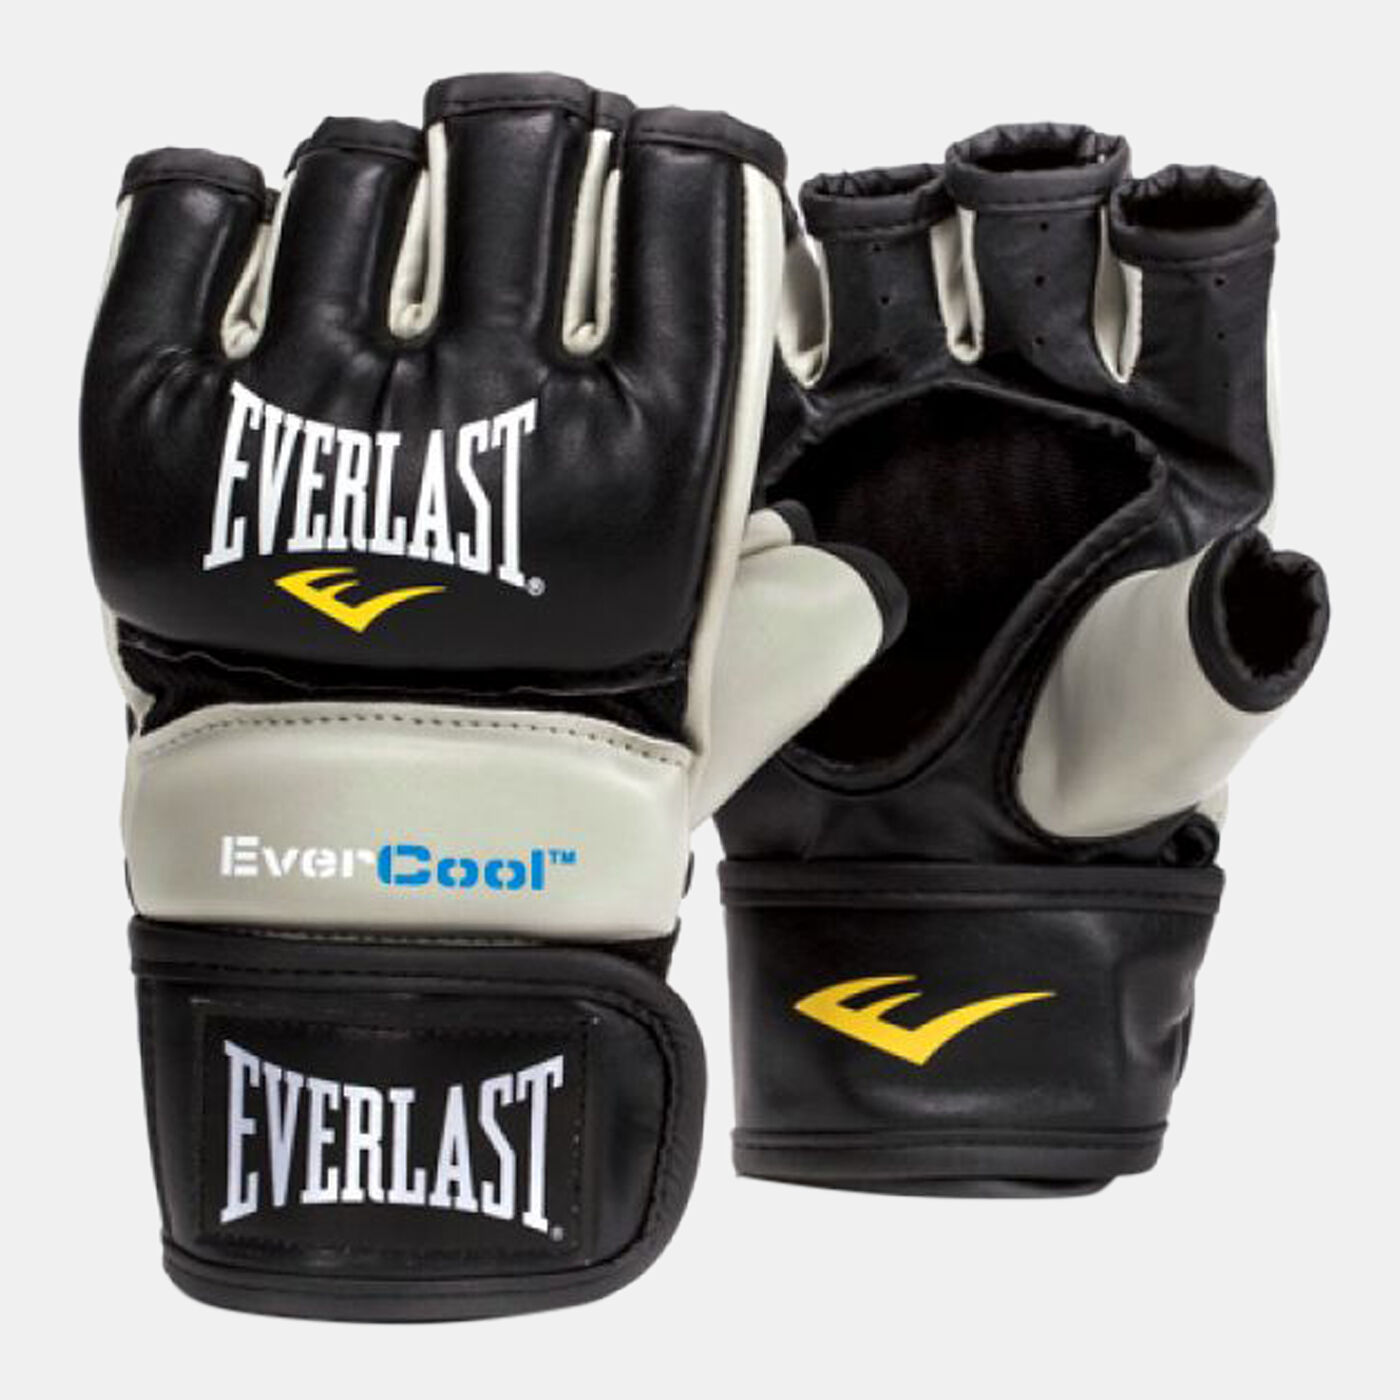 Men's Everstrike Training Gloves - L/XL